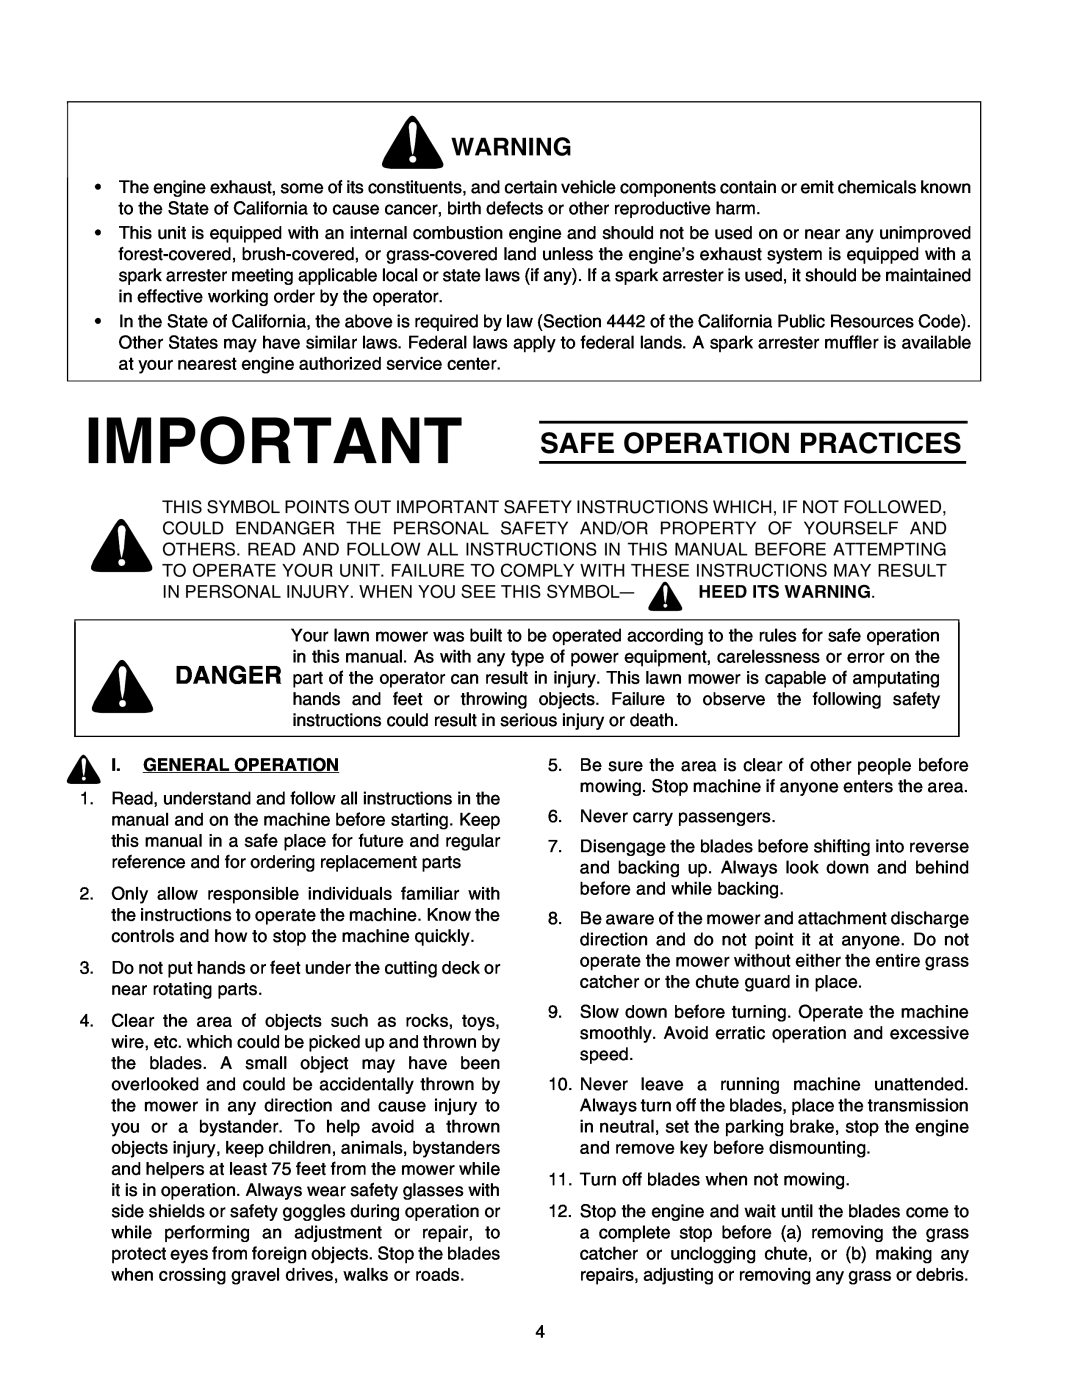 Cub Cadet 2176 manual Safe Operation Practices, I. General Operation 